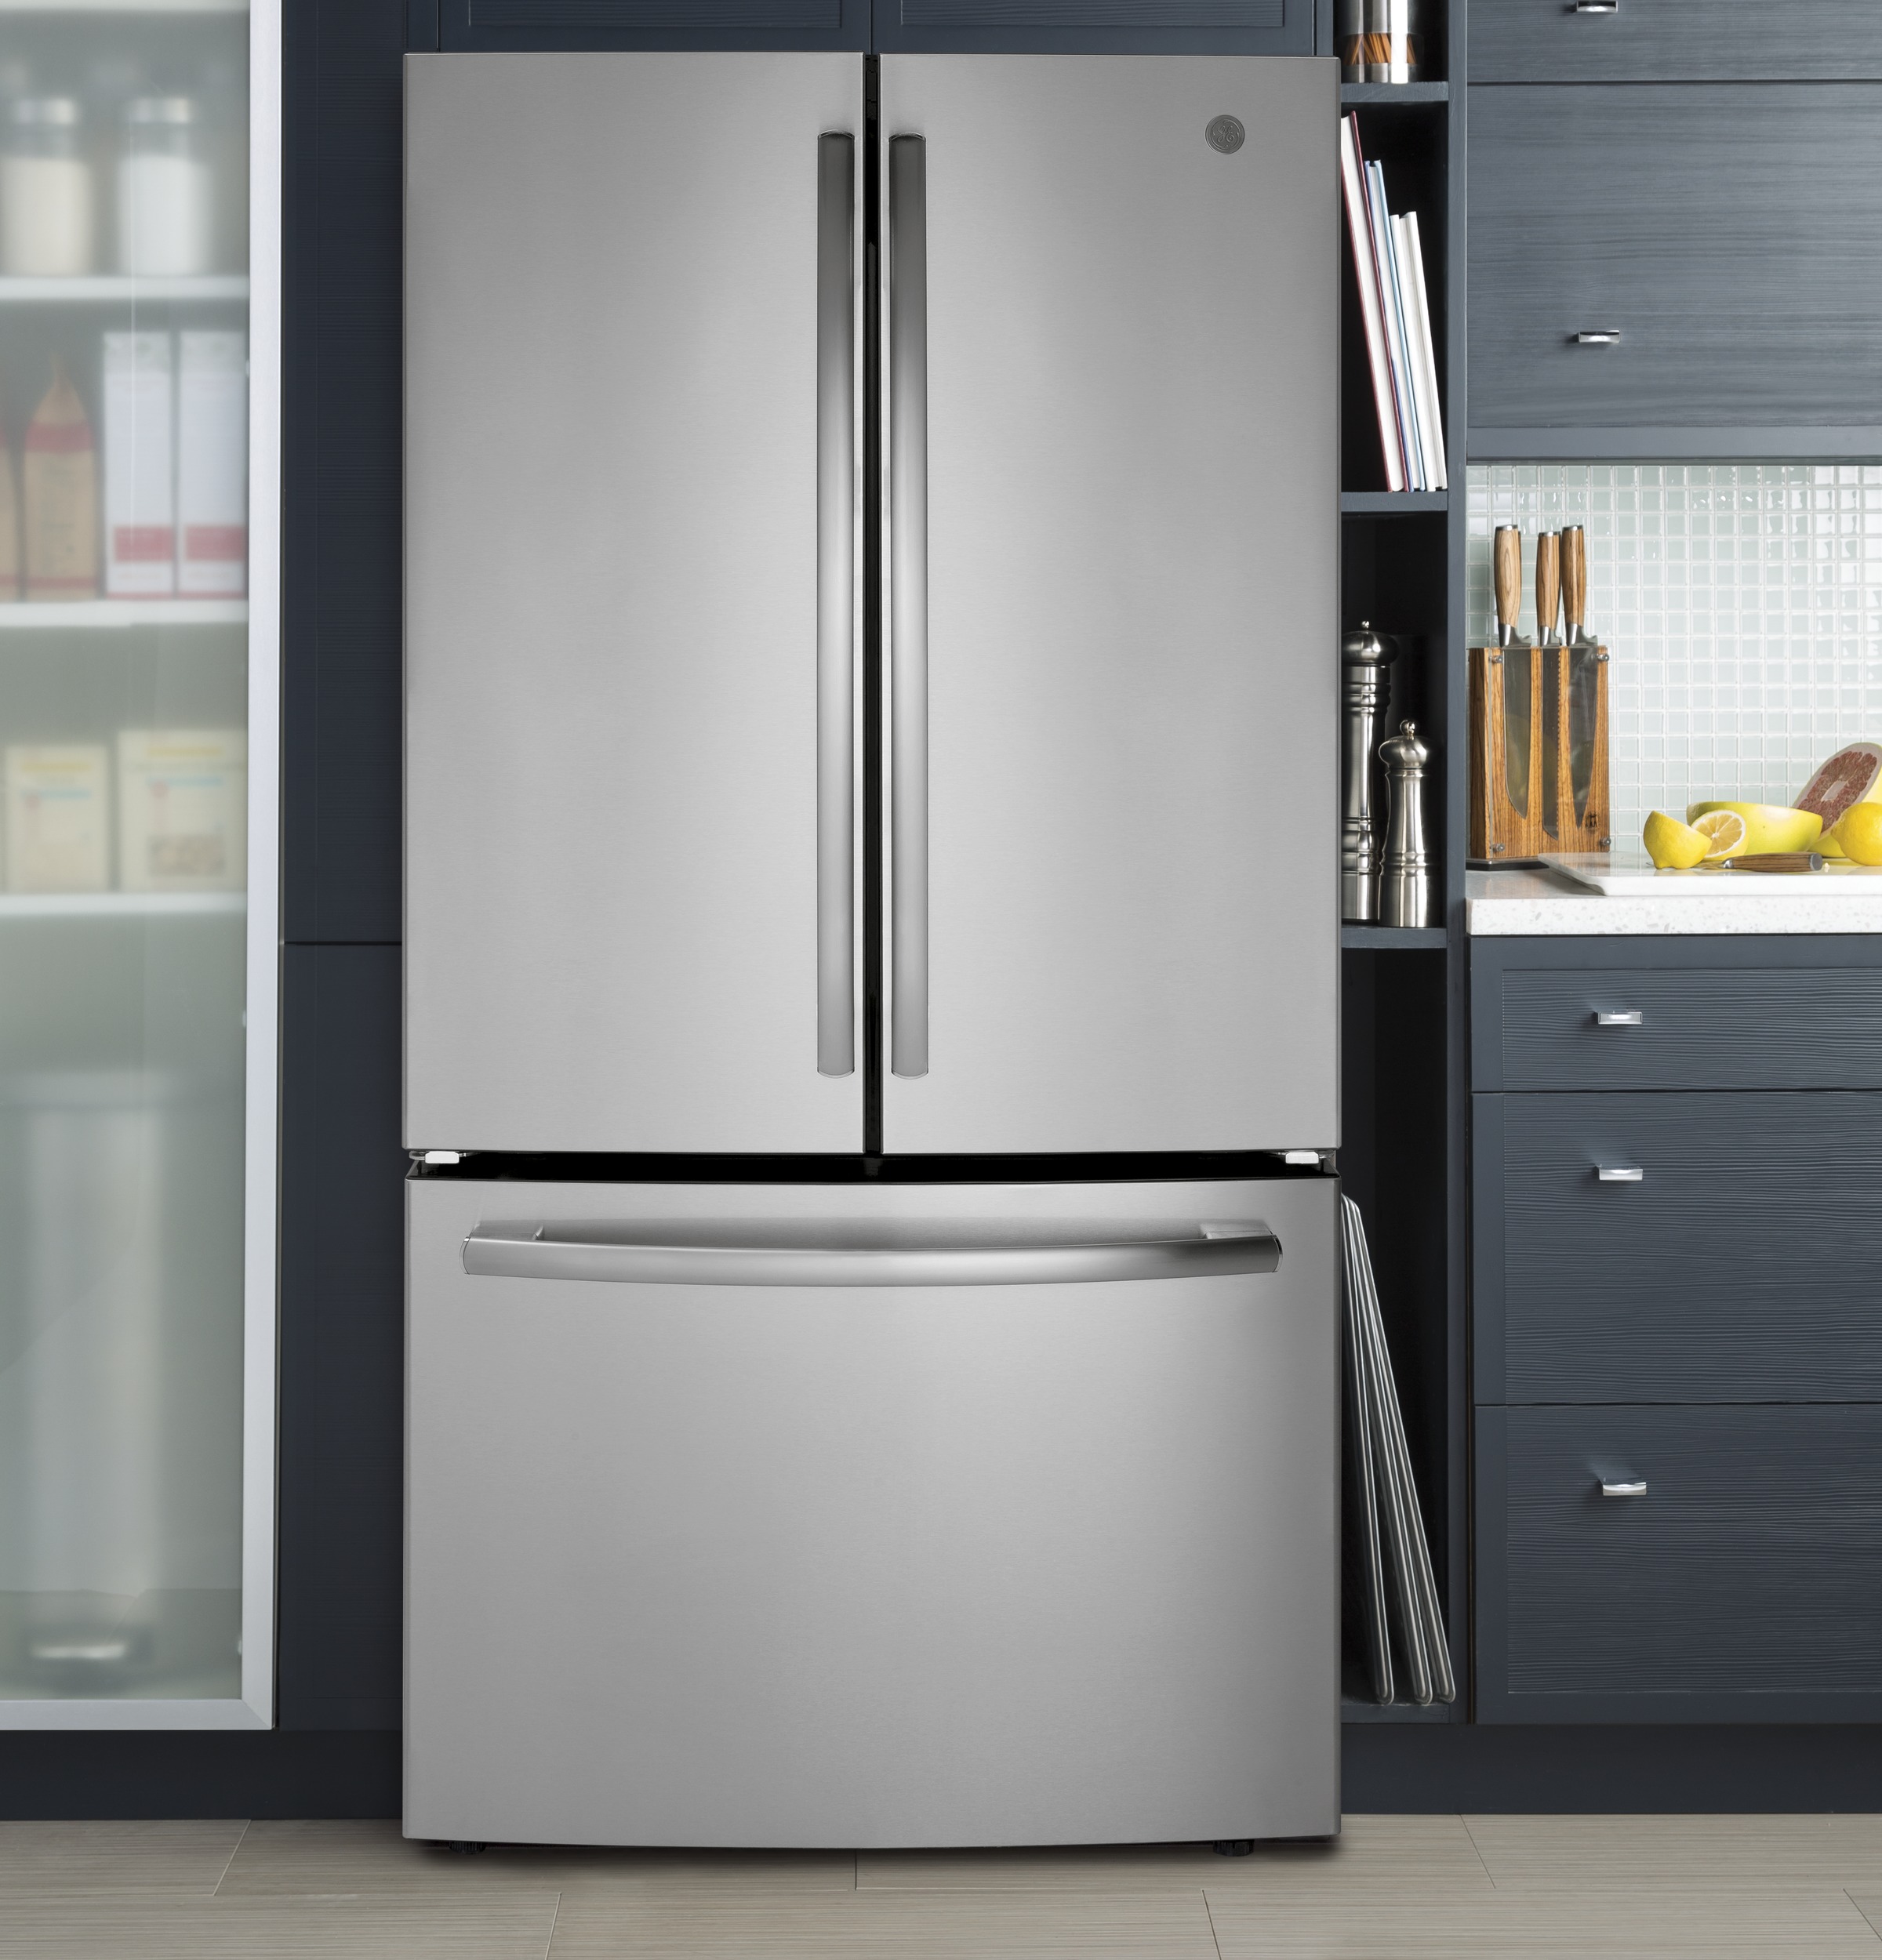 Customer Reviews: GE 27 Cu. Ft. French Door Refrigerator Stainless steel GNE27JSMSS - Best Buy